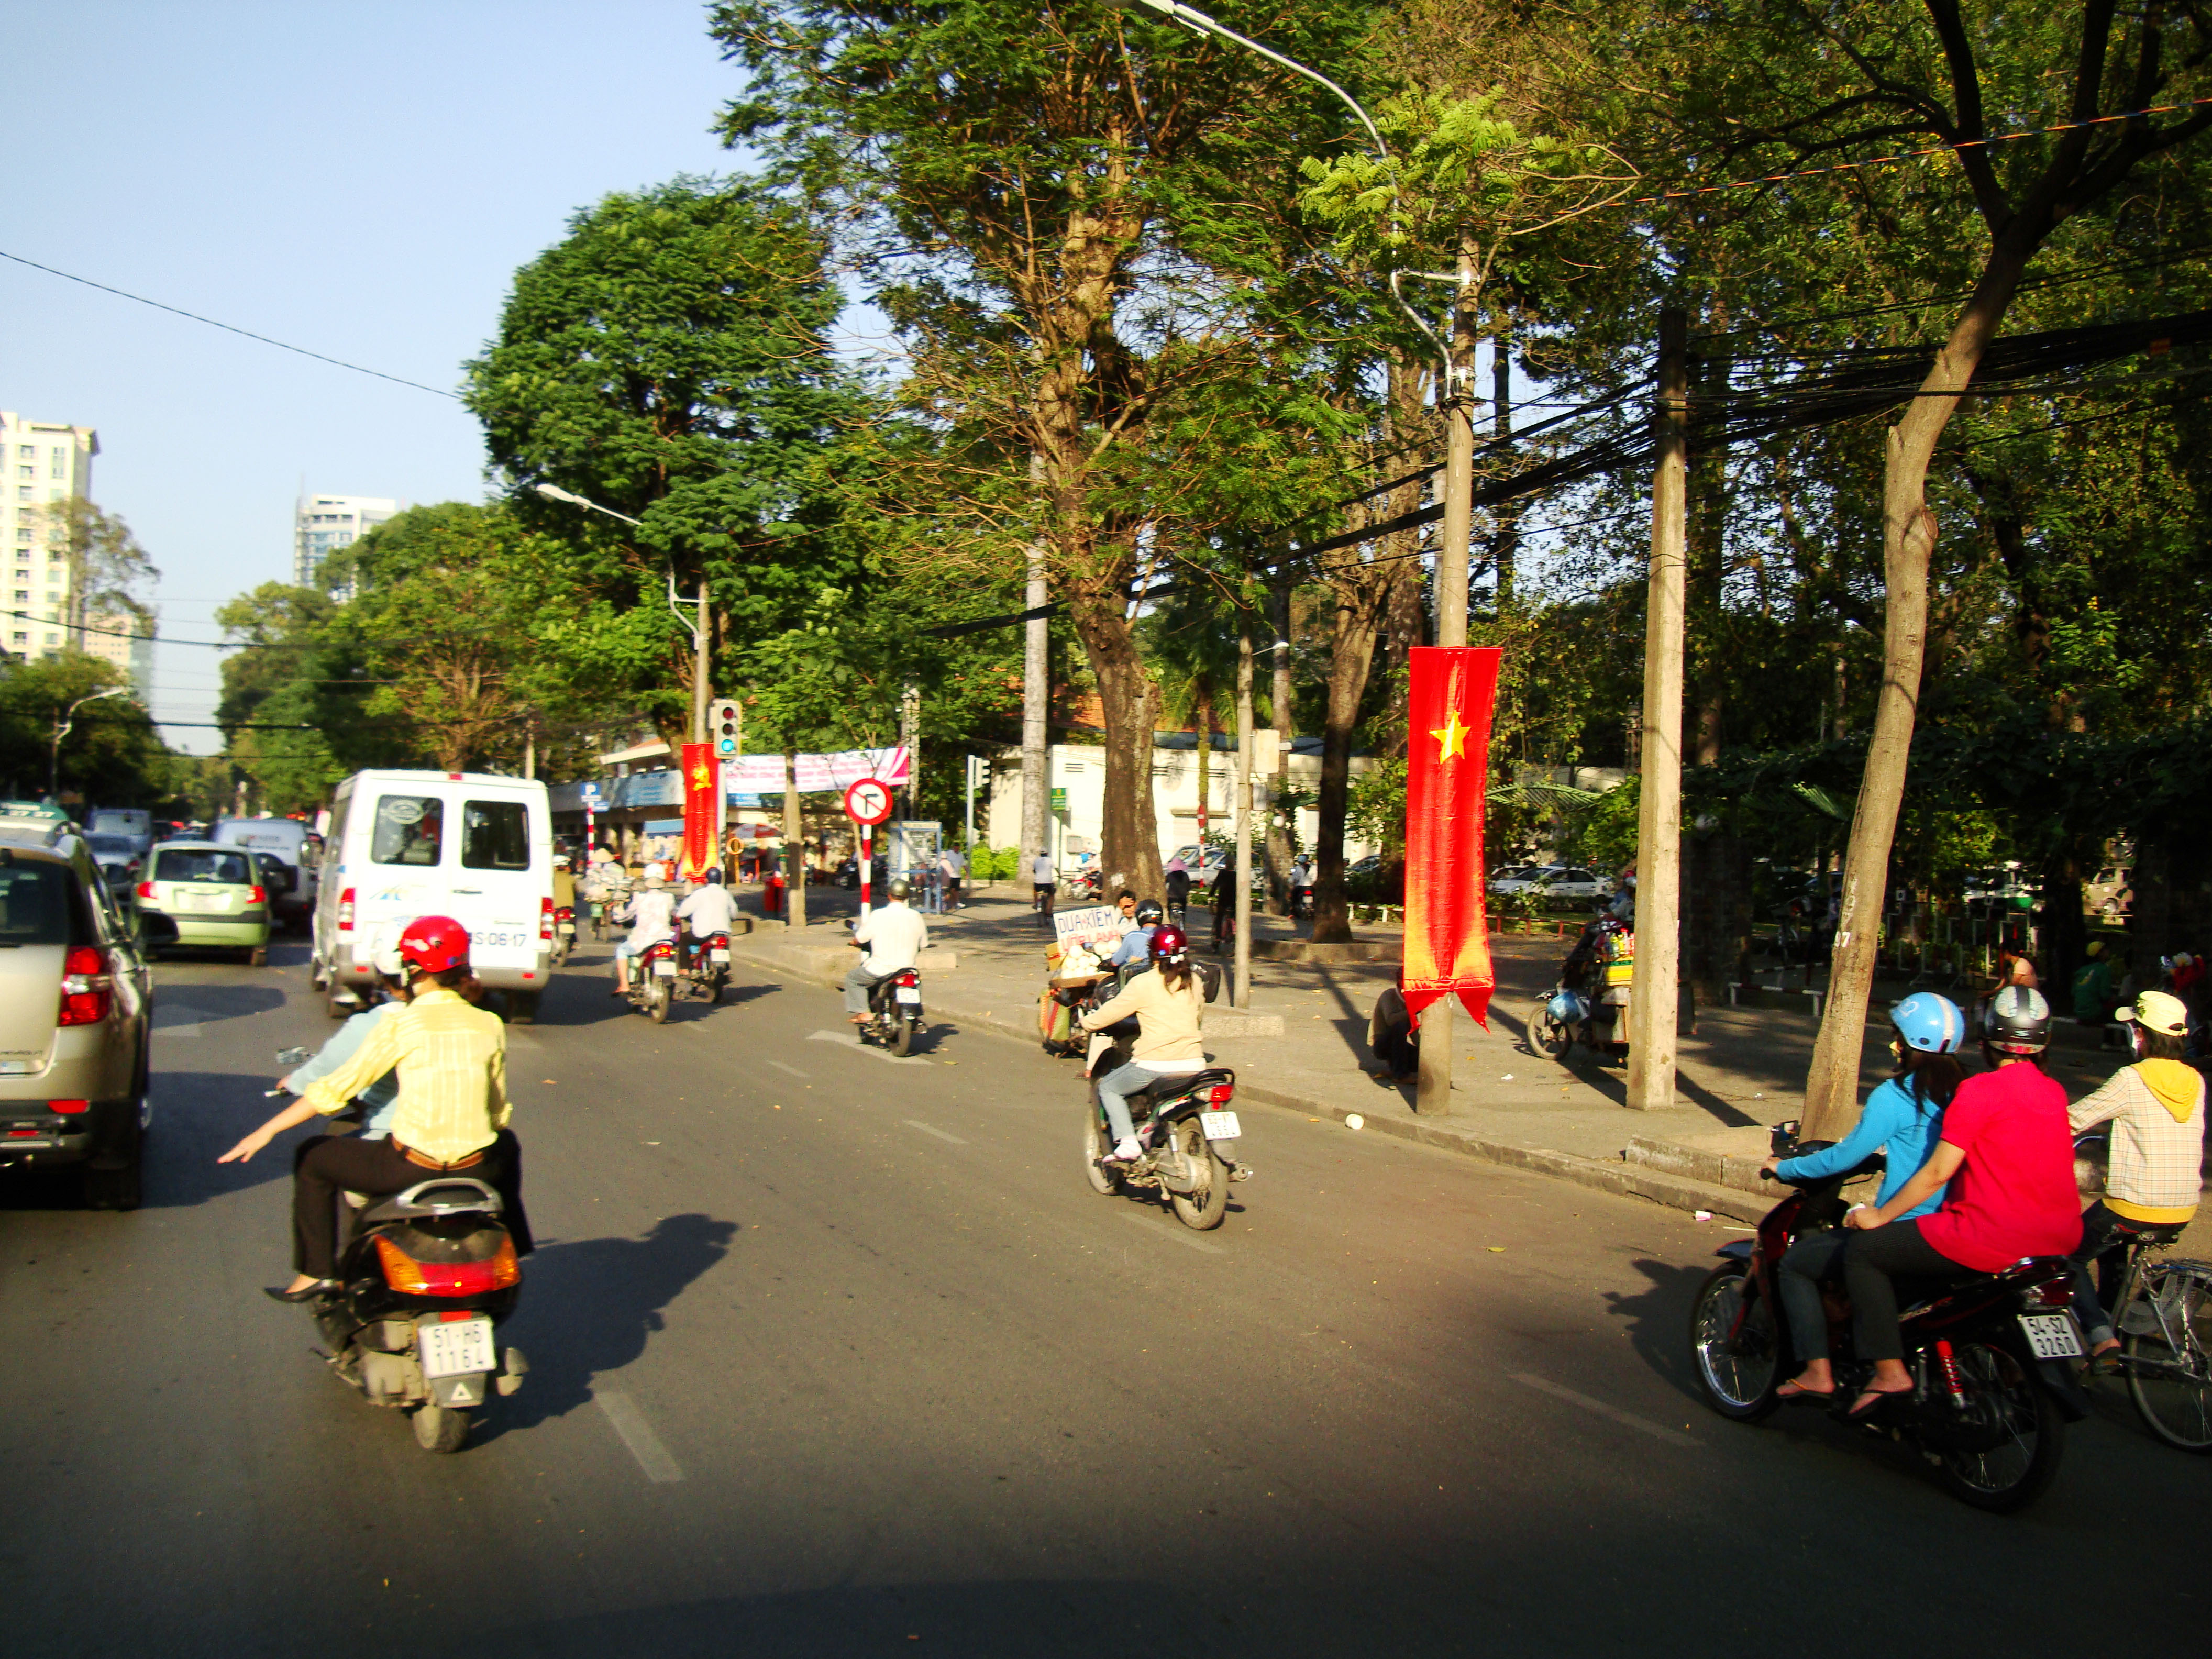 Vietnam HCMC Saigon street scenes everyday life Nov 2009 11